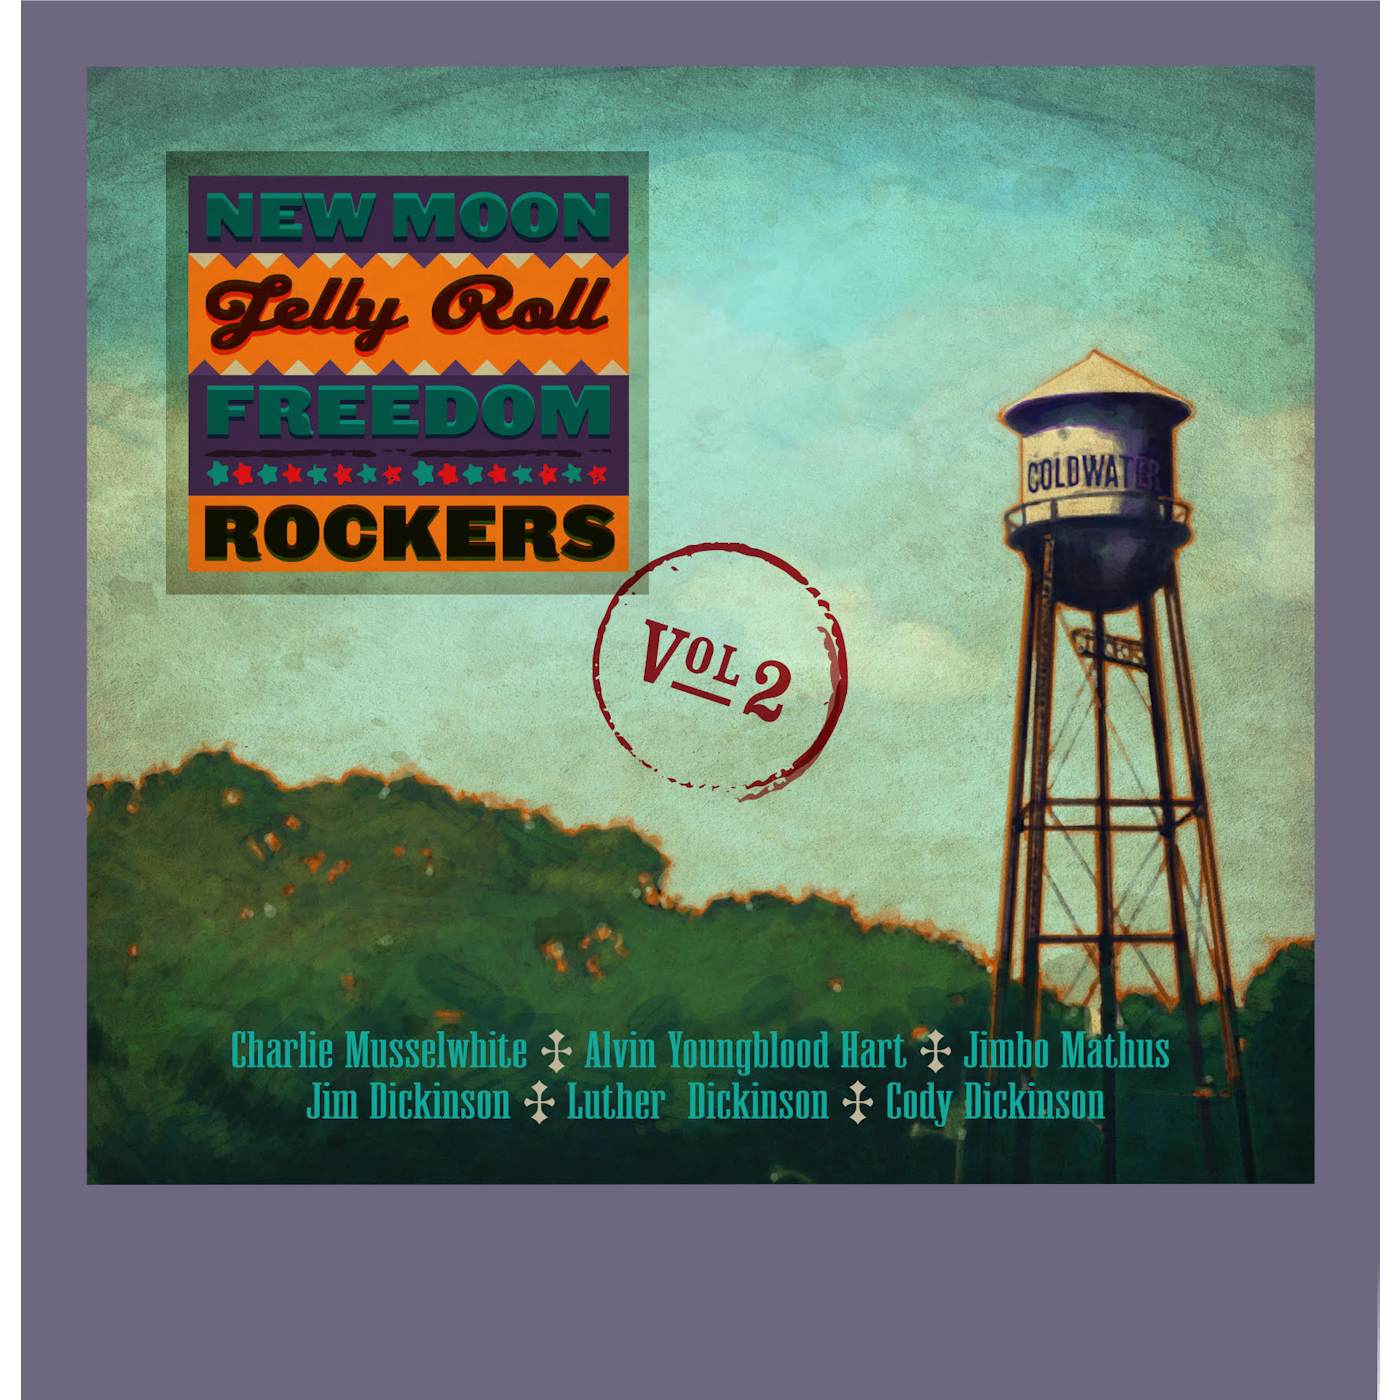 New Moon Jelly Roll Freedom Rockers VOL 2 CD